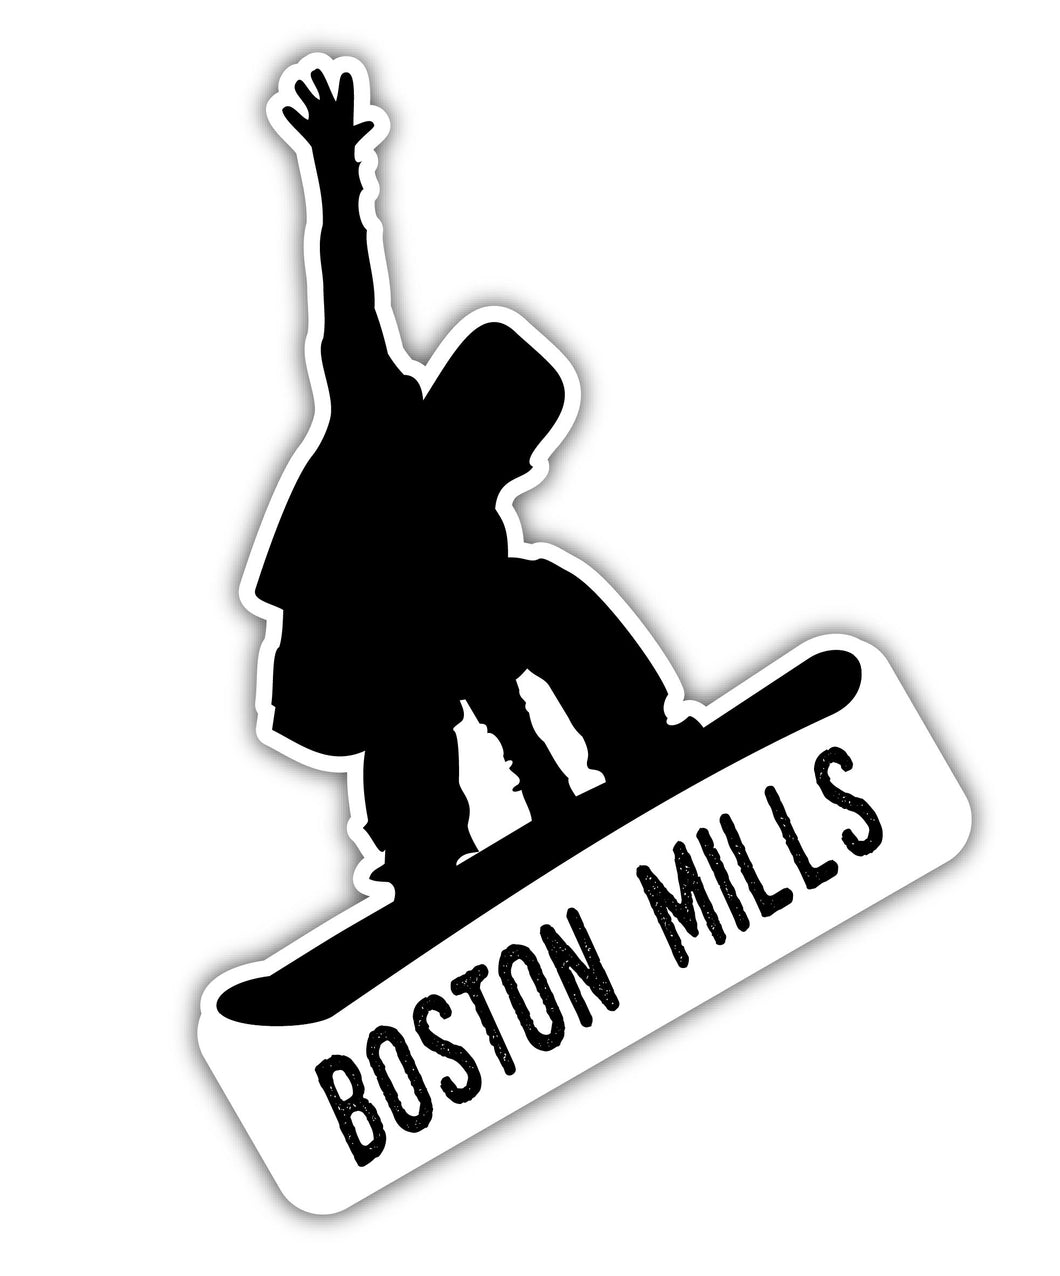 Boston Mills Ohio Ski Adventures Souvenir Approximately 5 x 2.5-Inch Vinyl Decal Sticker Goggle Design